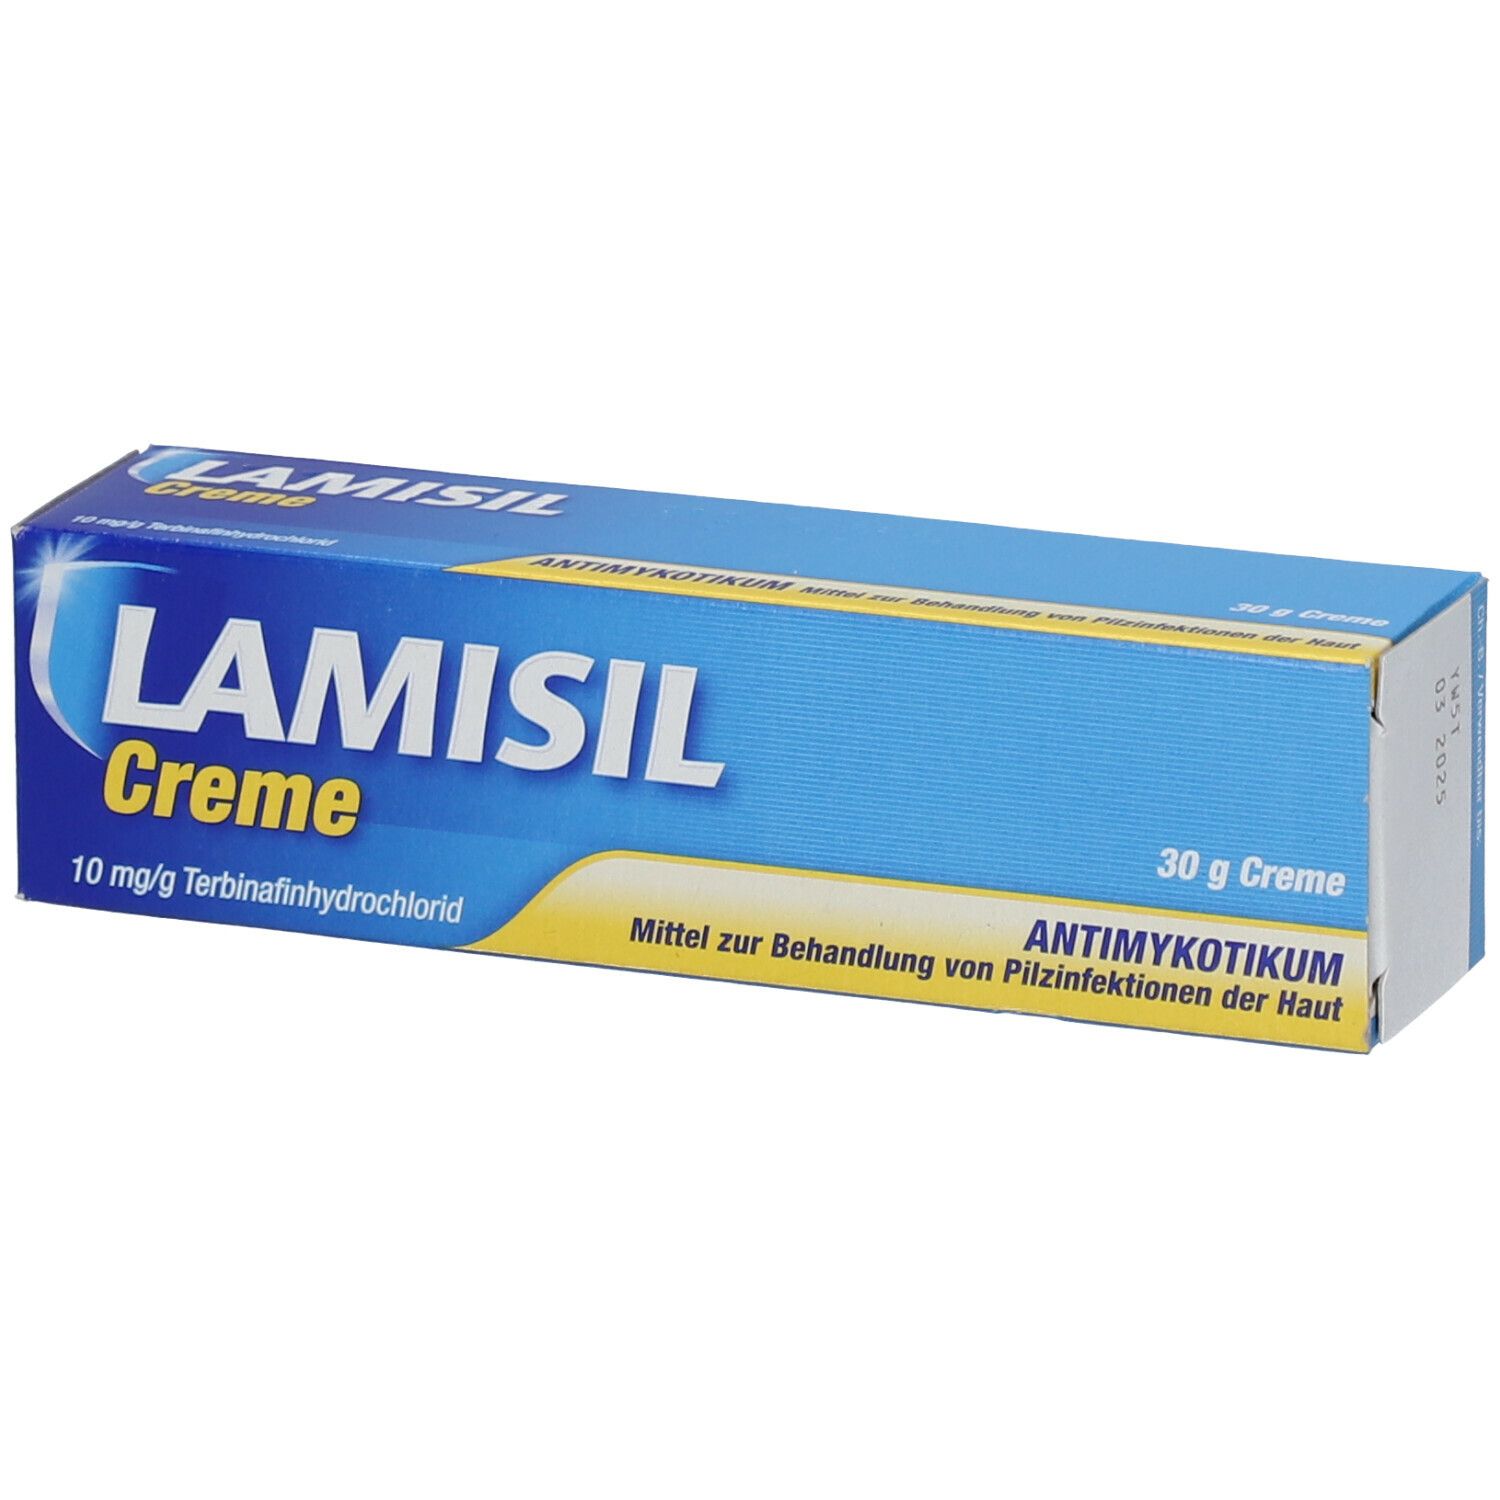 Lamisil Creme, 1% Terbinafinhydrochlorid